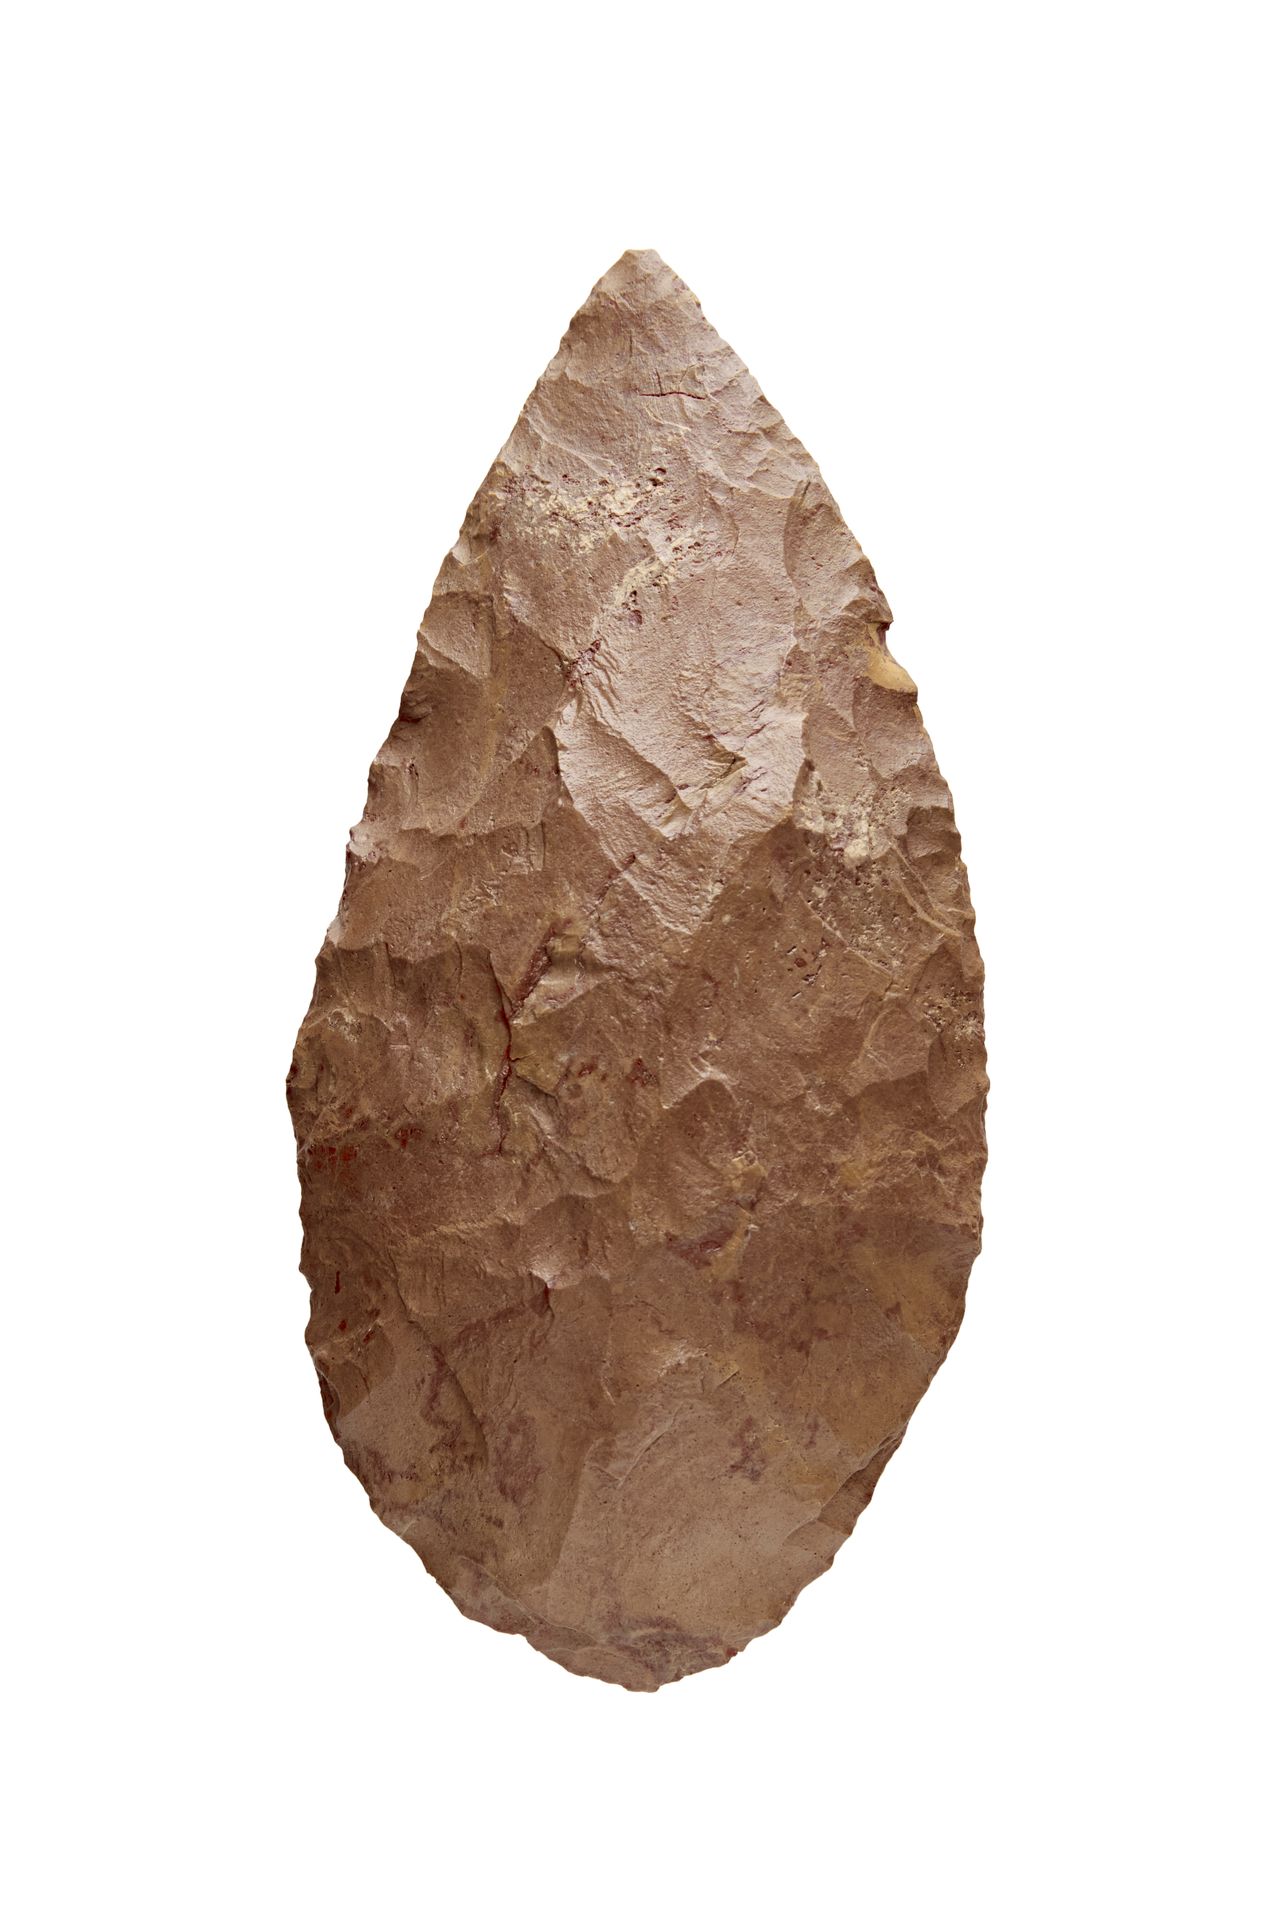 Beau biface amygdaloïde Lustrous brown quartzite
Sub-Saharan West Africa, Acheul&hellip;